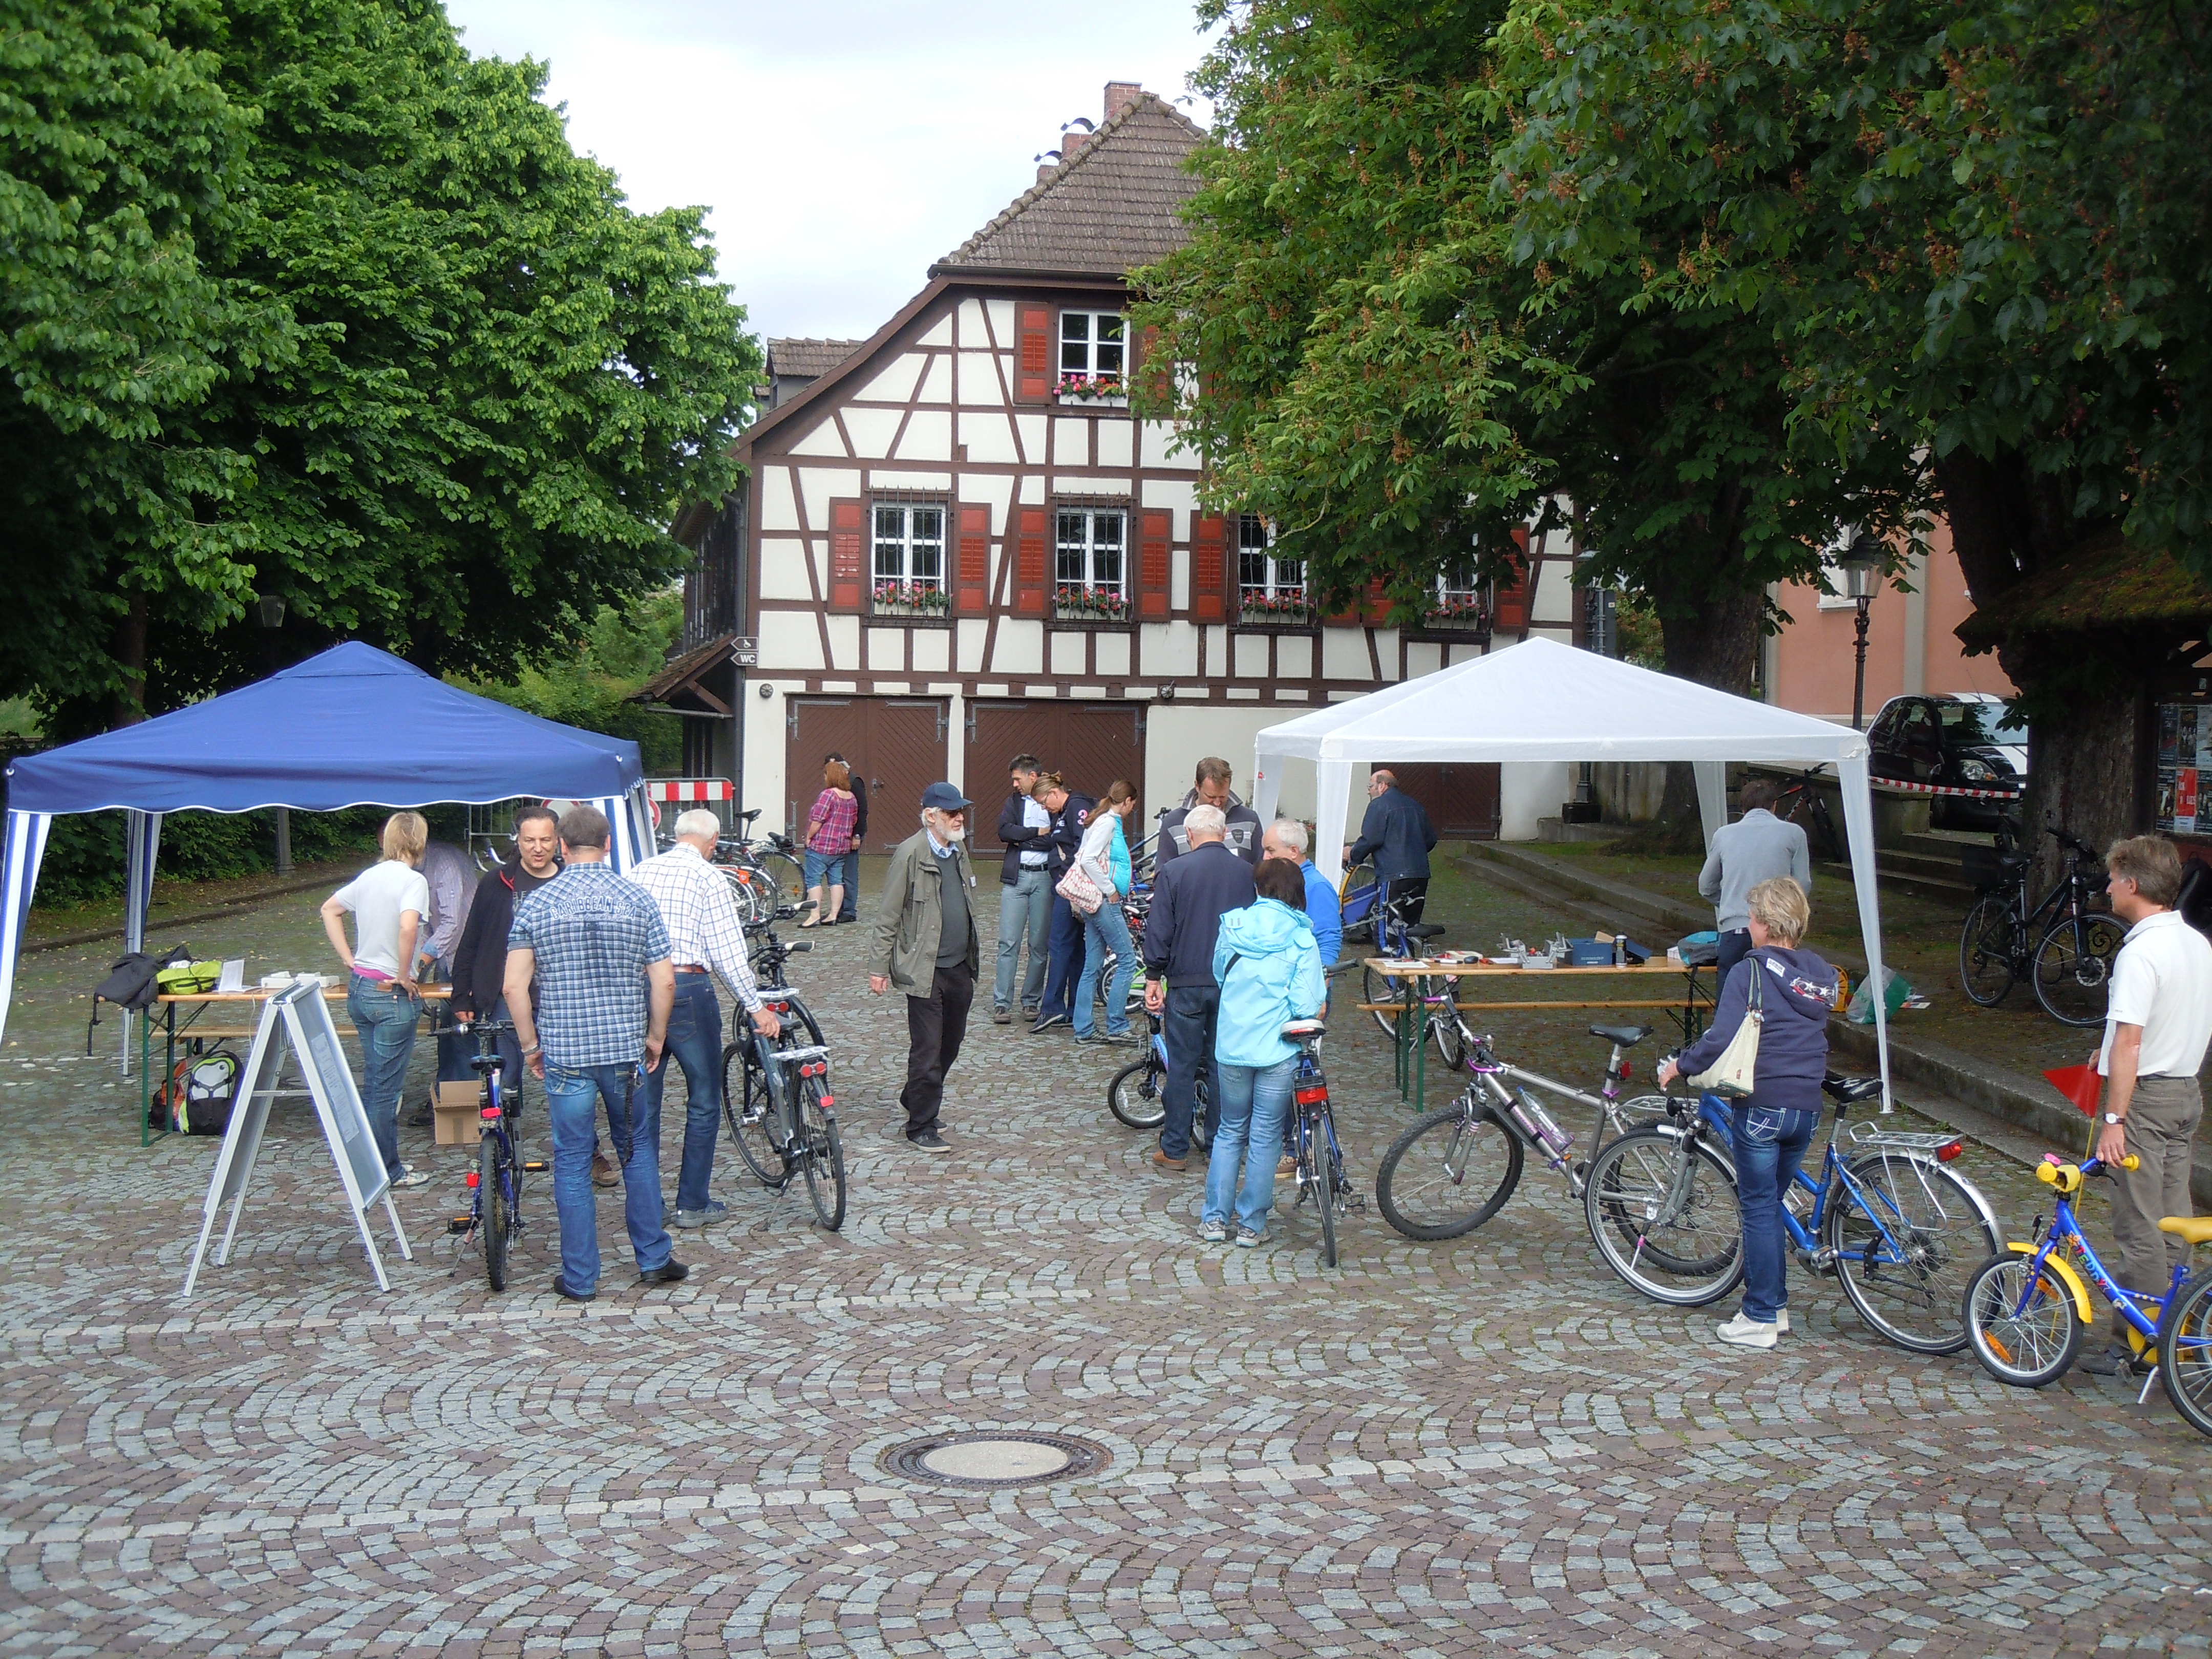  Fahrradbörse auf dem Rathausplatz - Foto: Lokale Agenda 21 